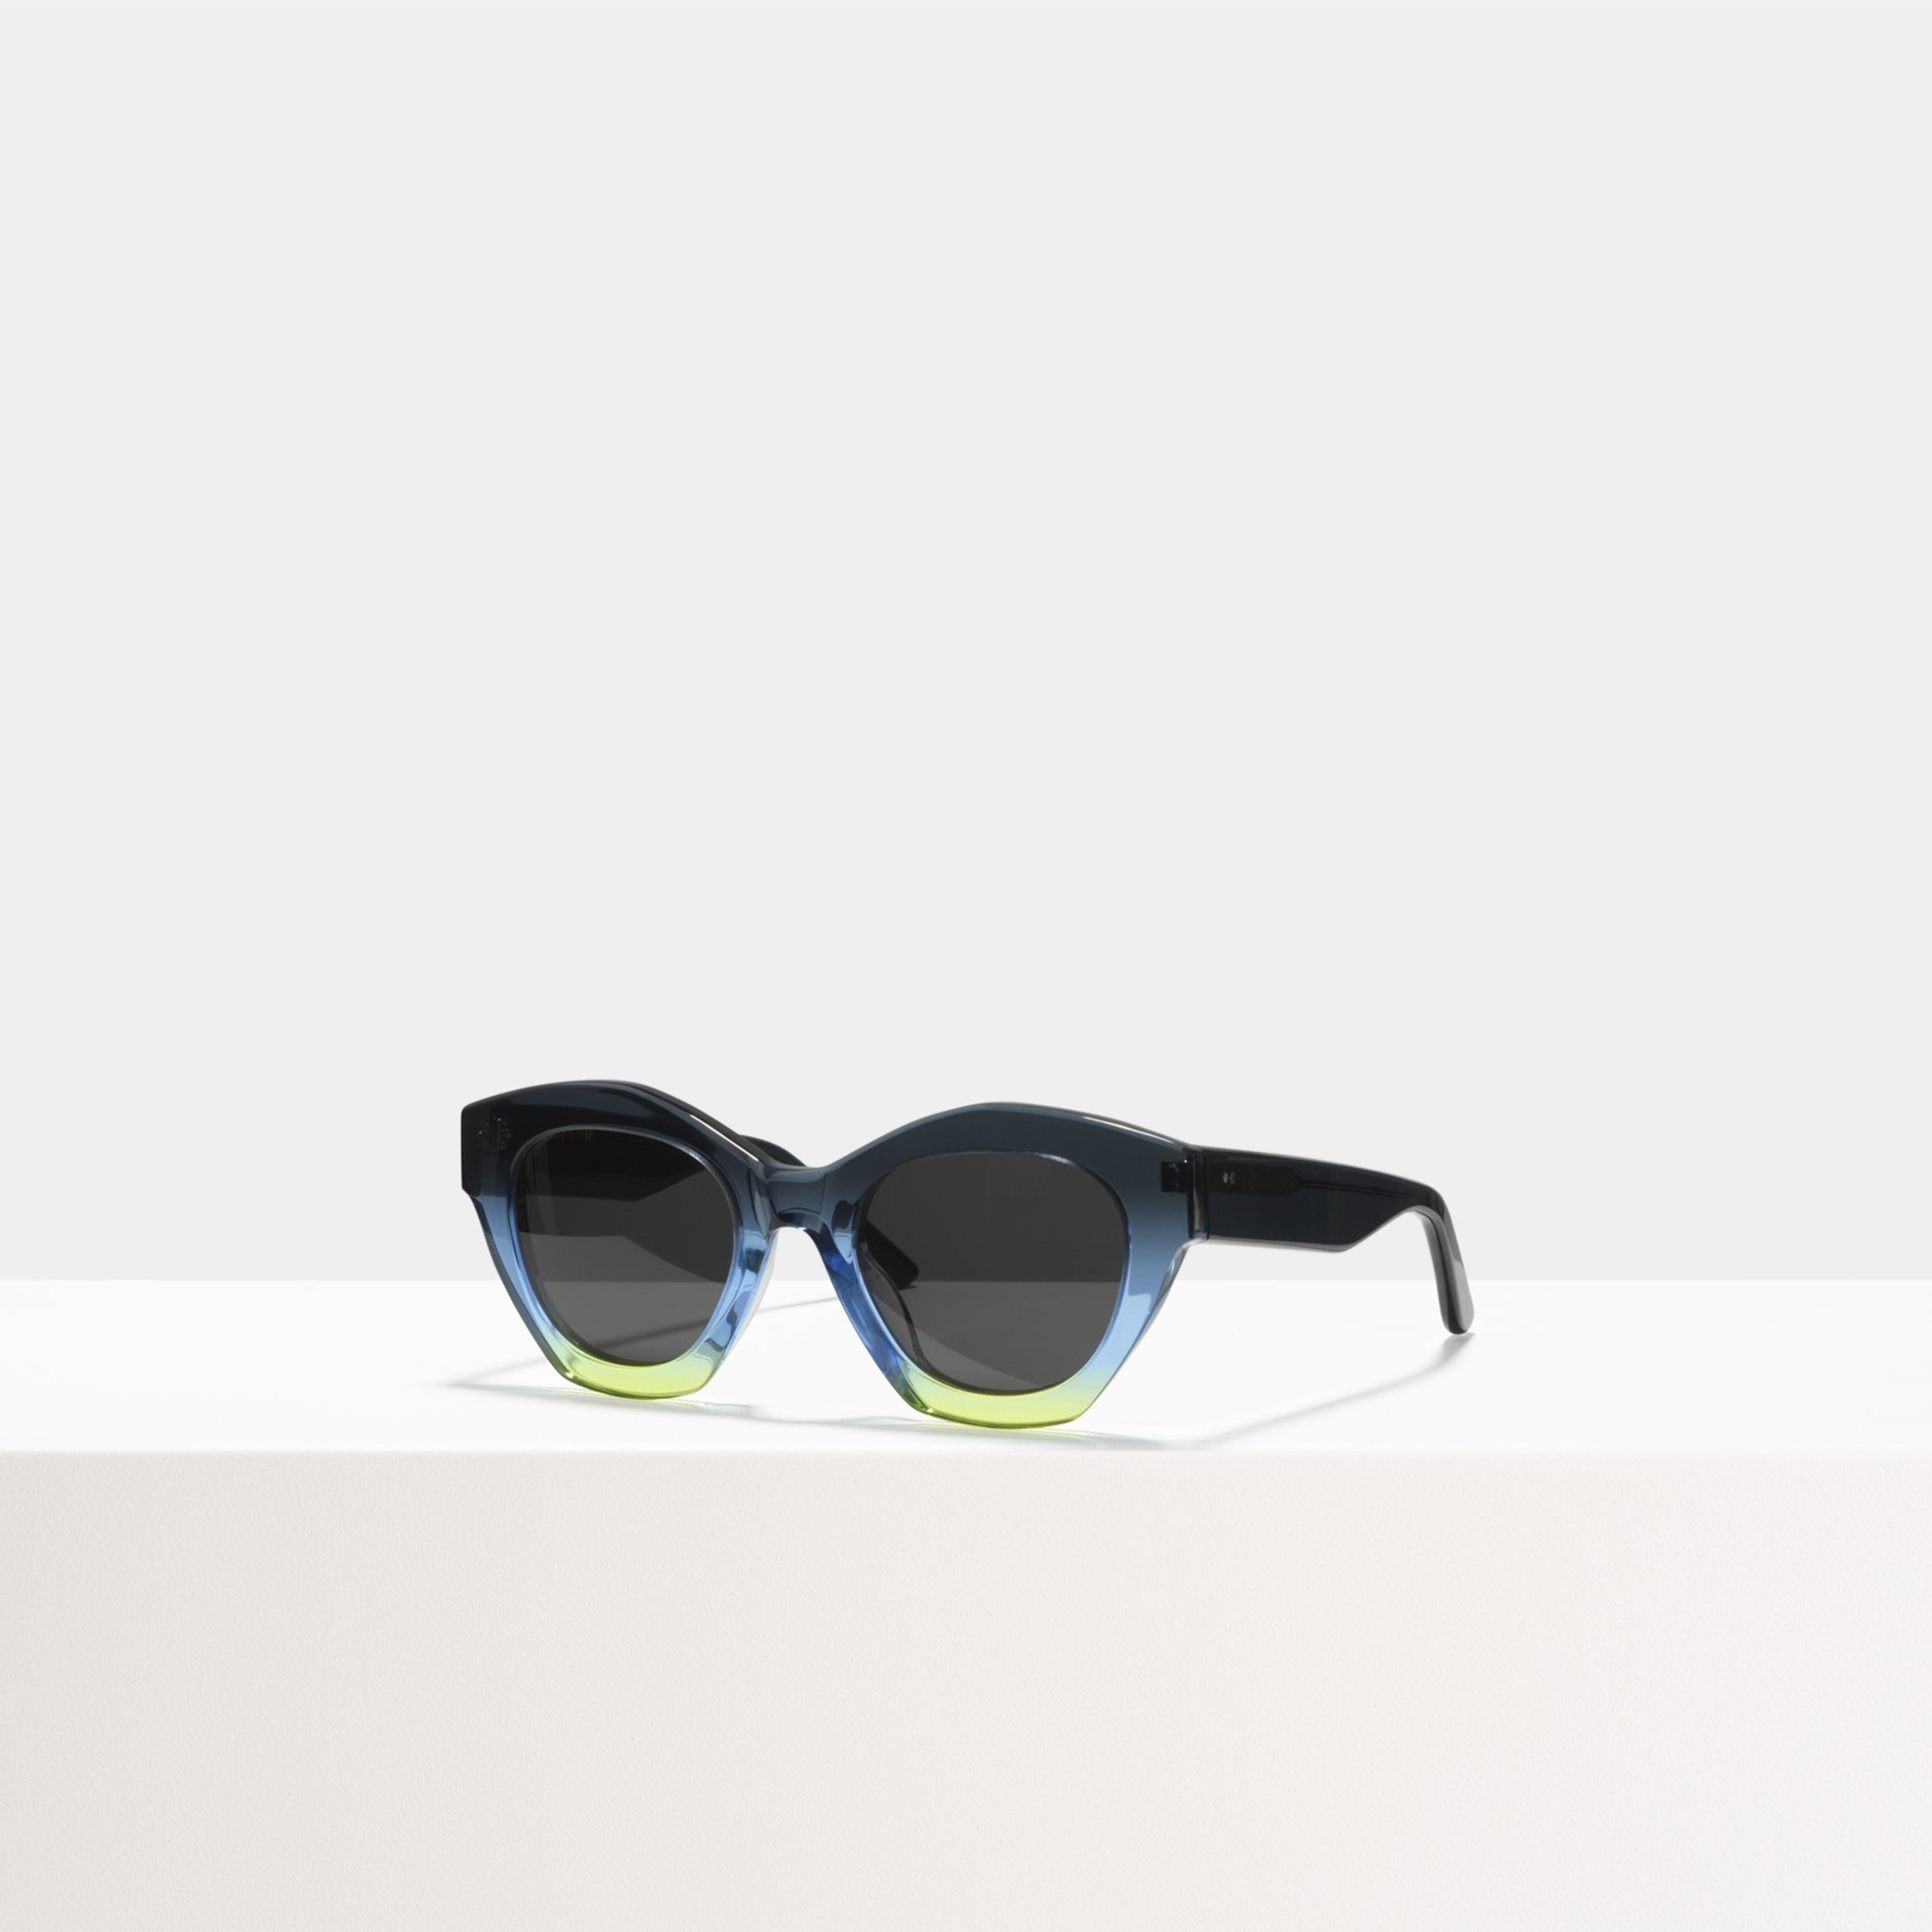 Ace & Tate Sonnenbrillen |  Acetat in Blau, Gelb